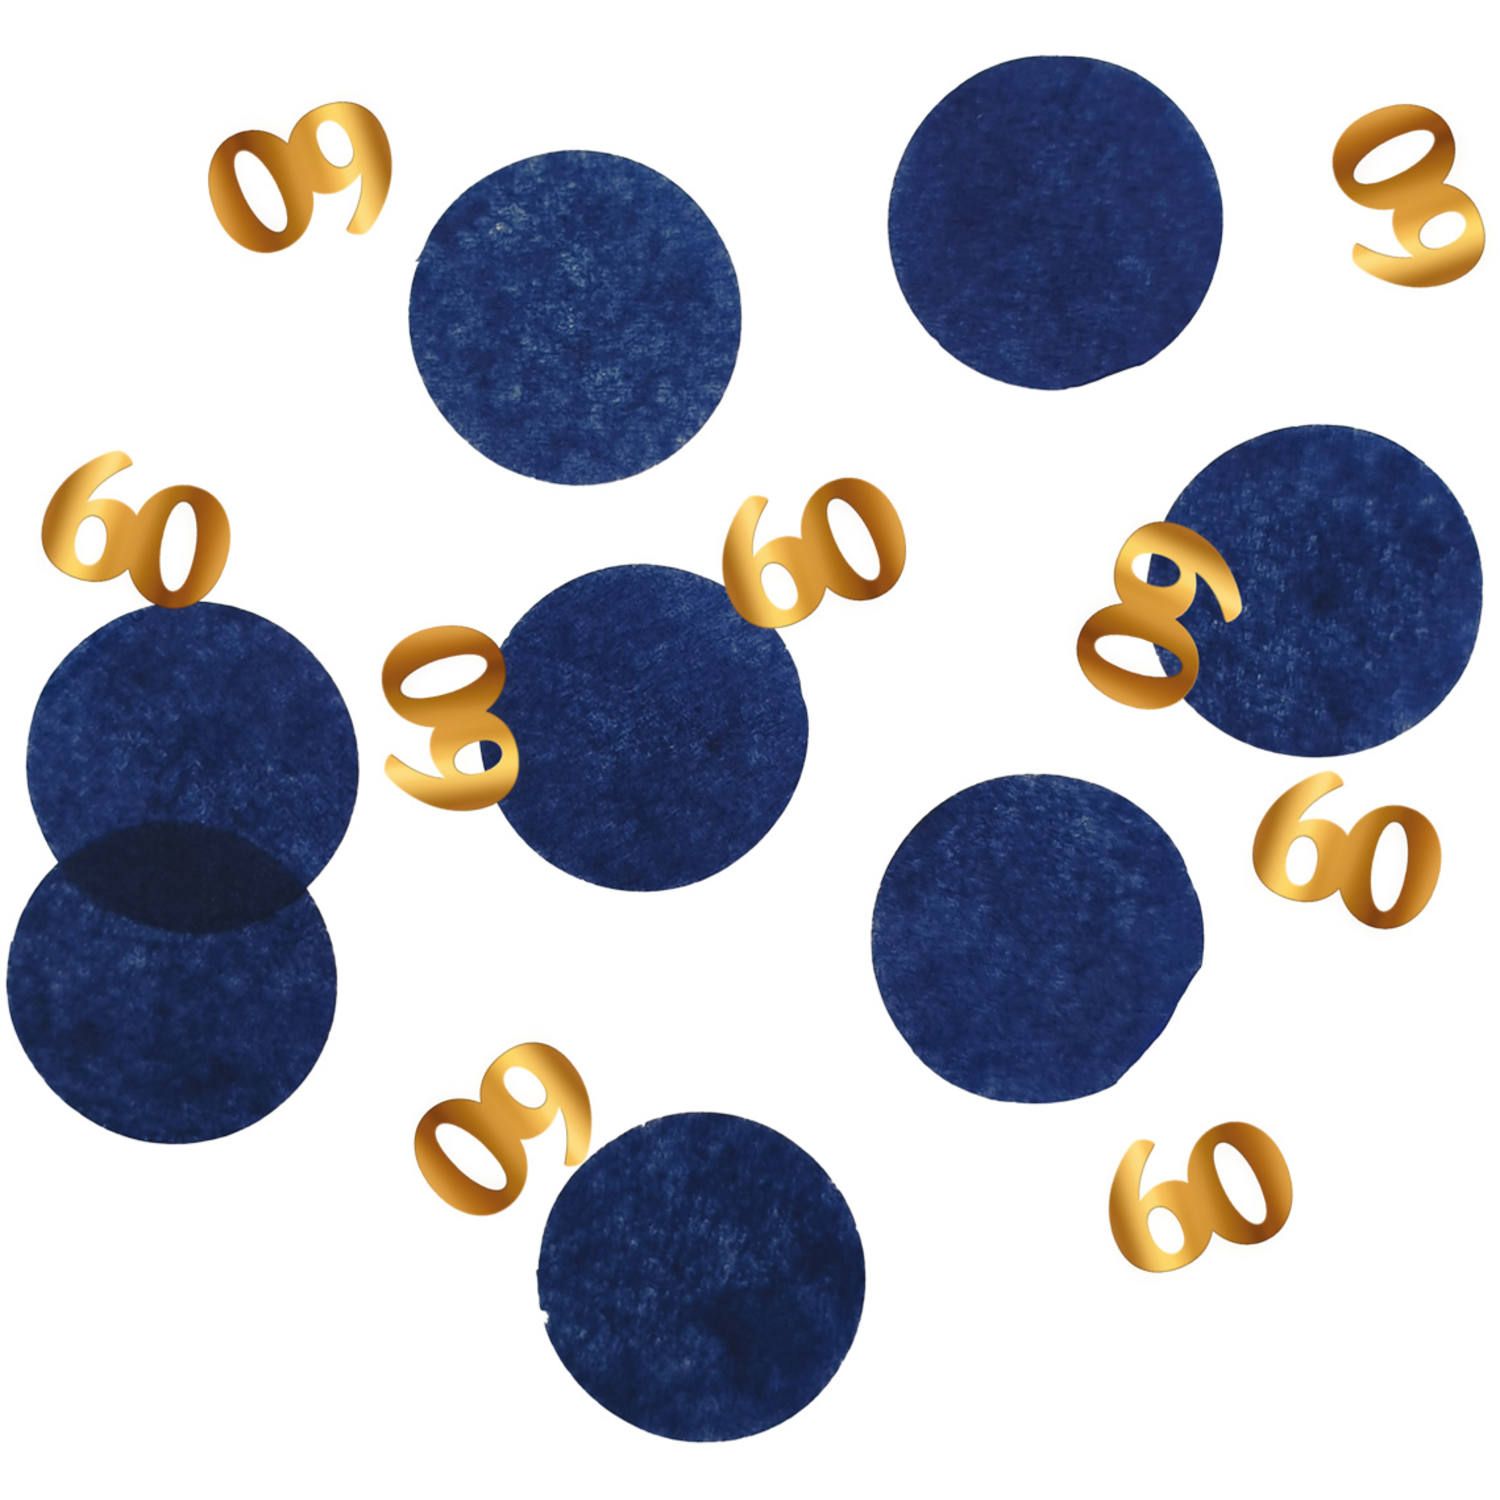 Feest confetti elegant true blue 60 jaar